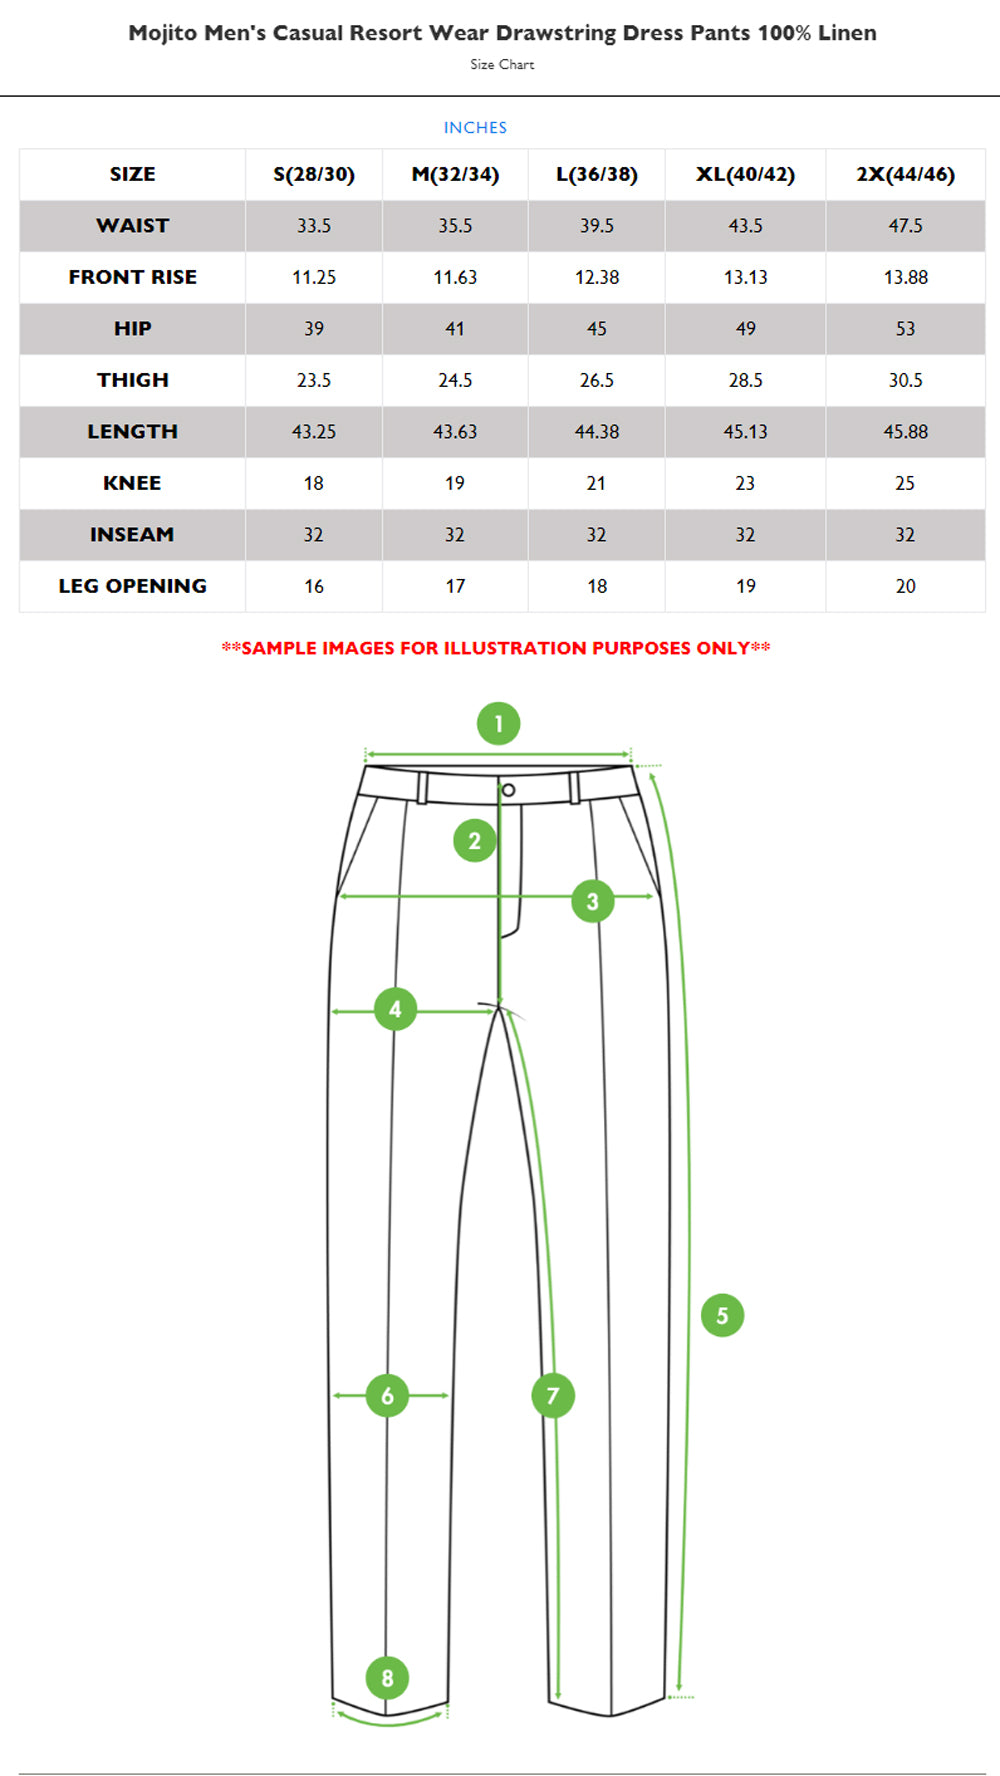 Mojito Men's Casual Resort Wear Drawstring Dress Pants 100% Linen